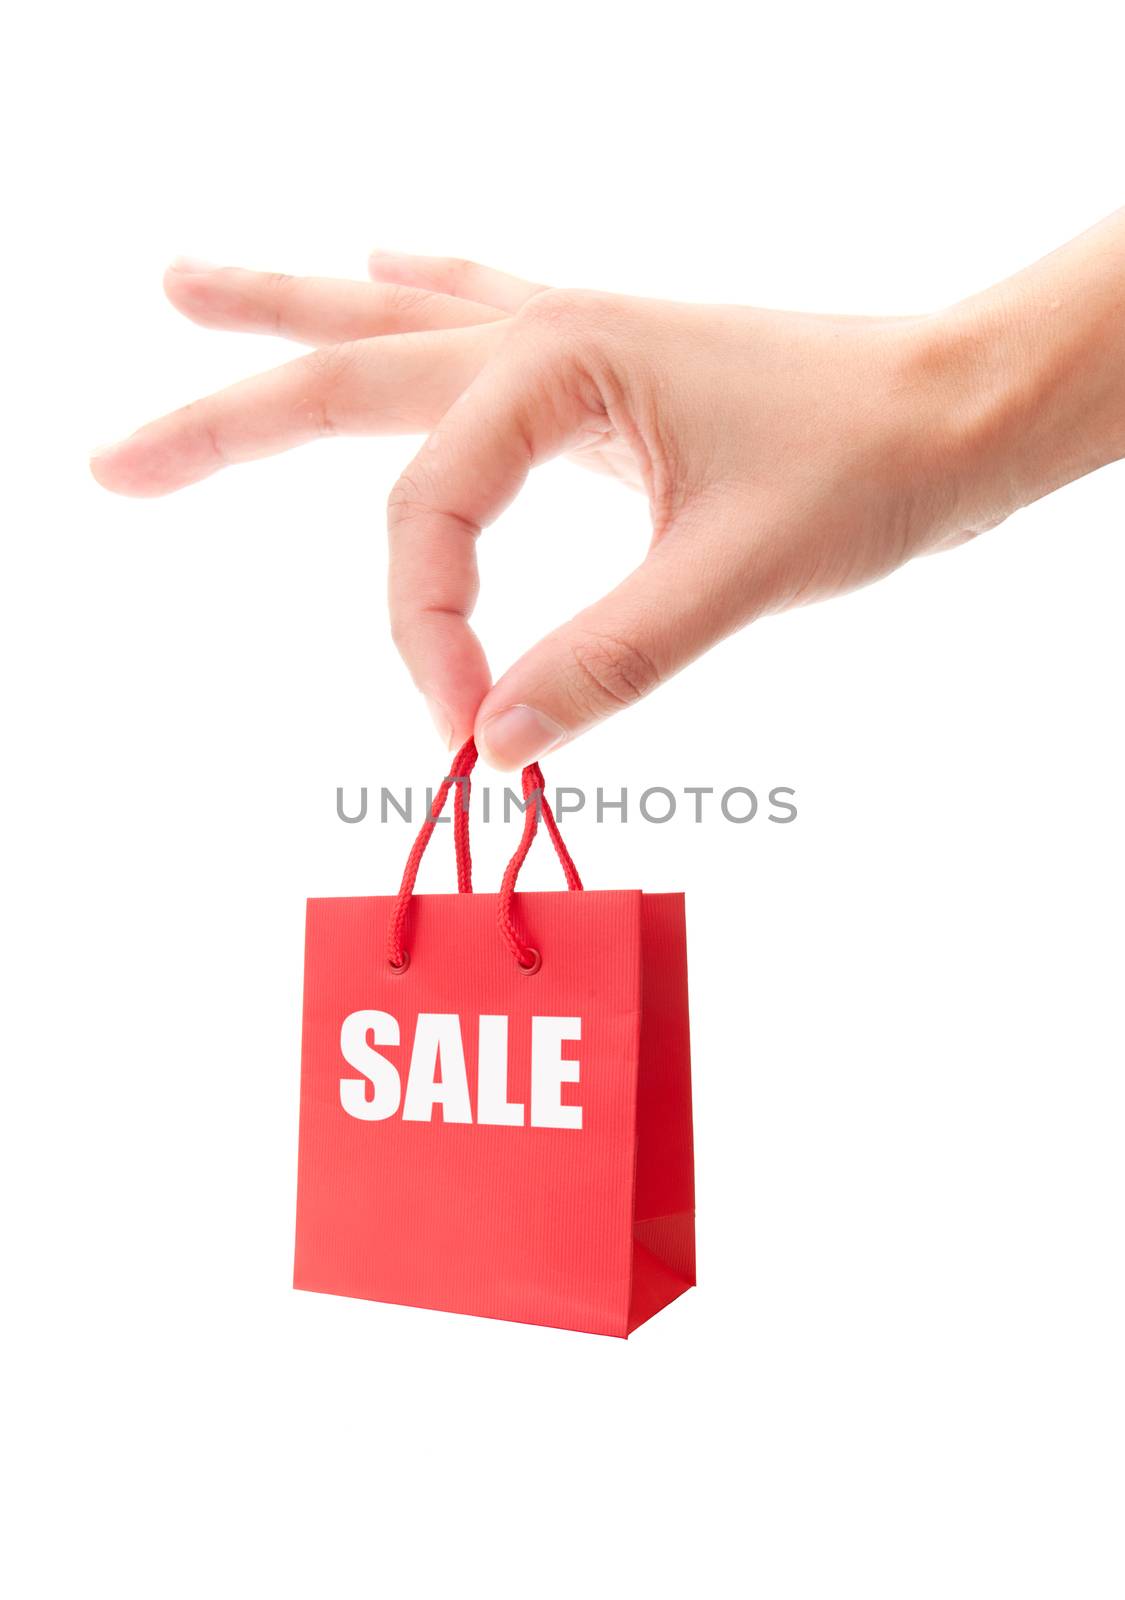 Sales  by unikpix